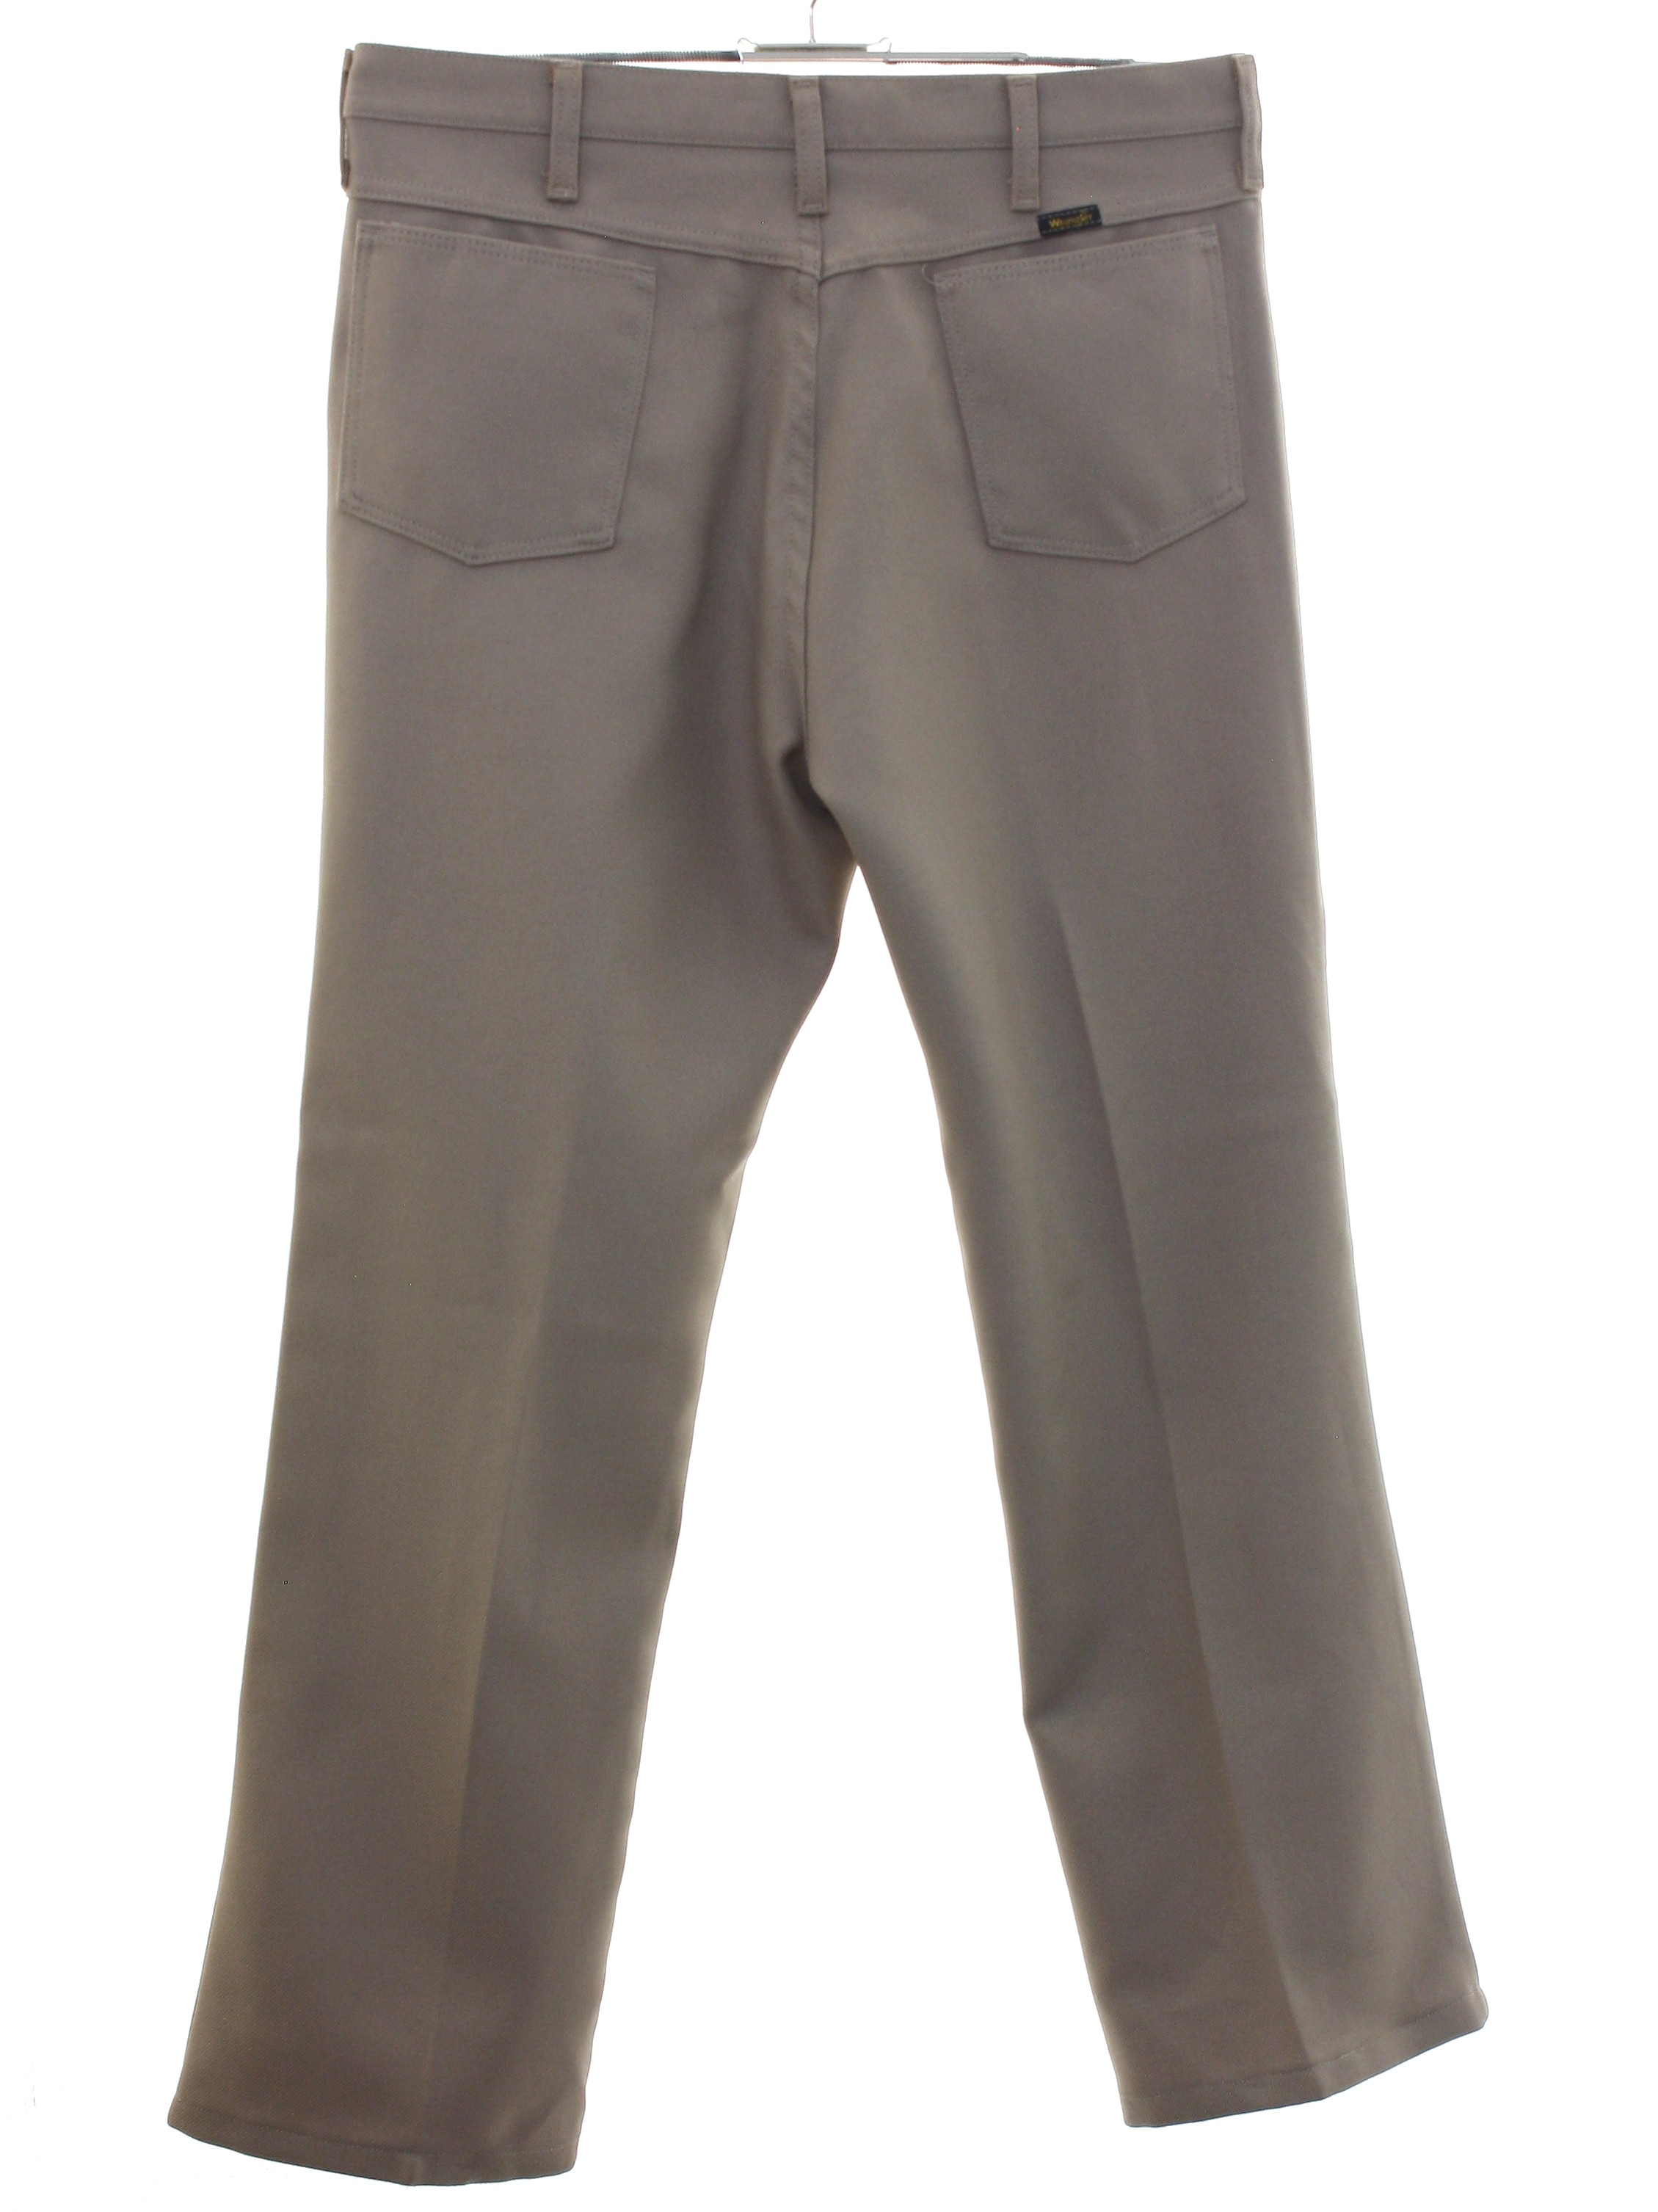 Retro 1970's Pants (Wrangler) : 70s -Wrangler- Mens tan solid colored ...